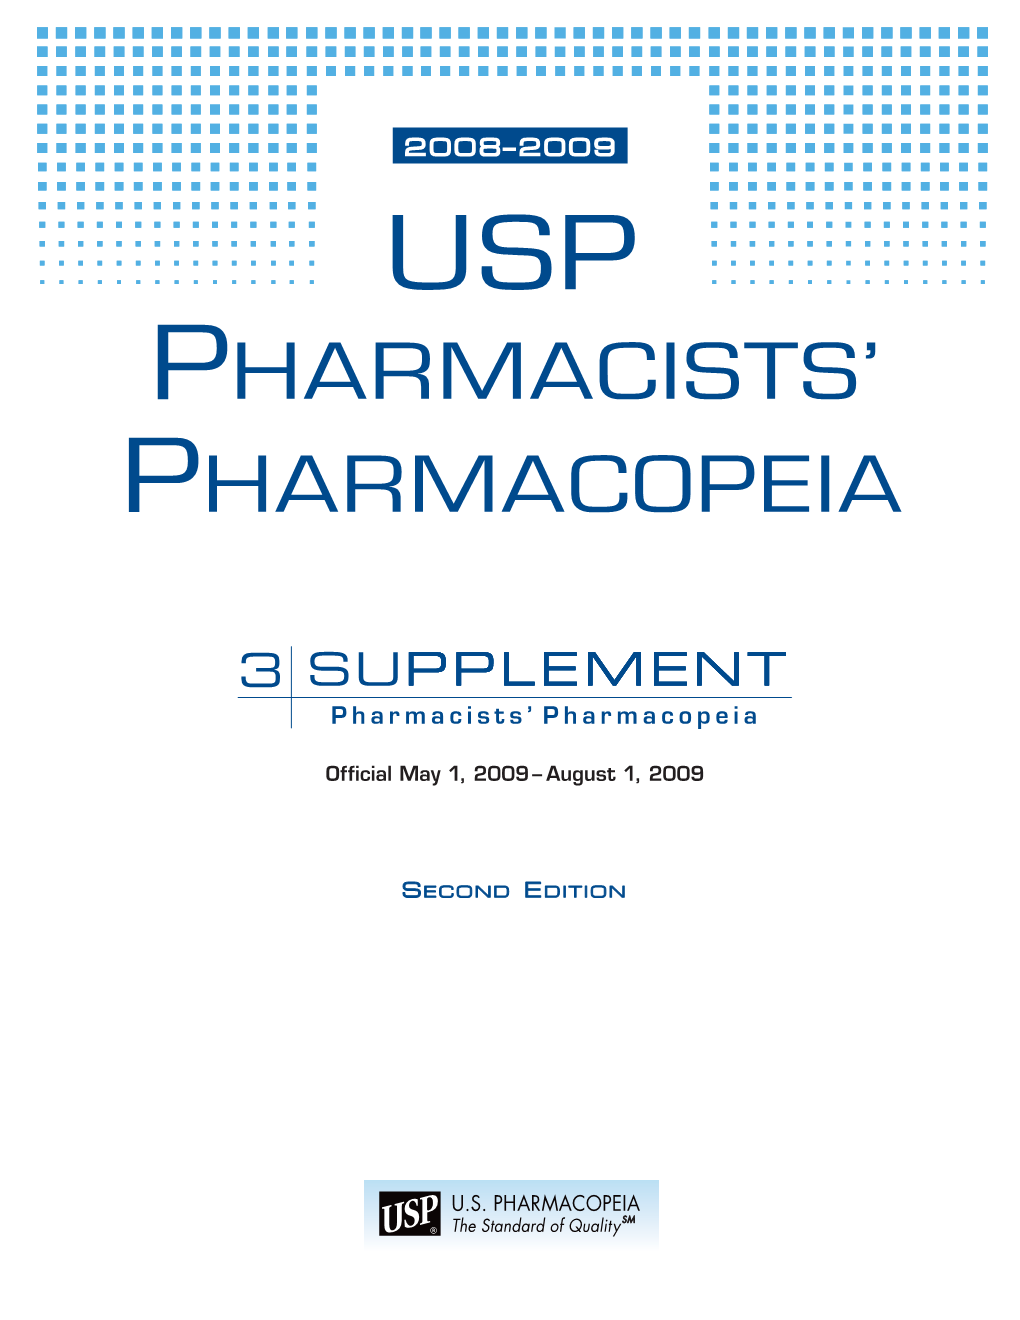 Pharmacists' Pharmacopeia